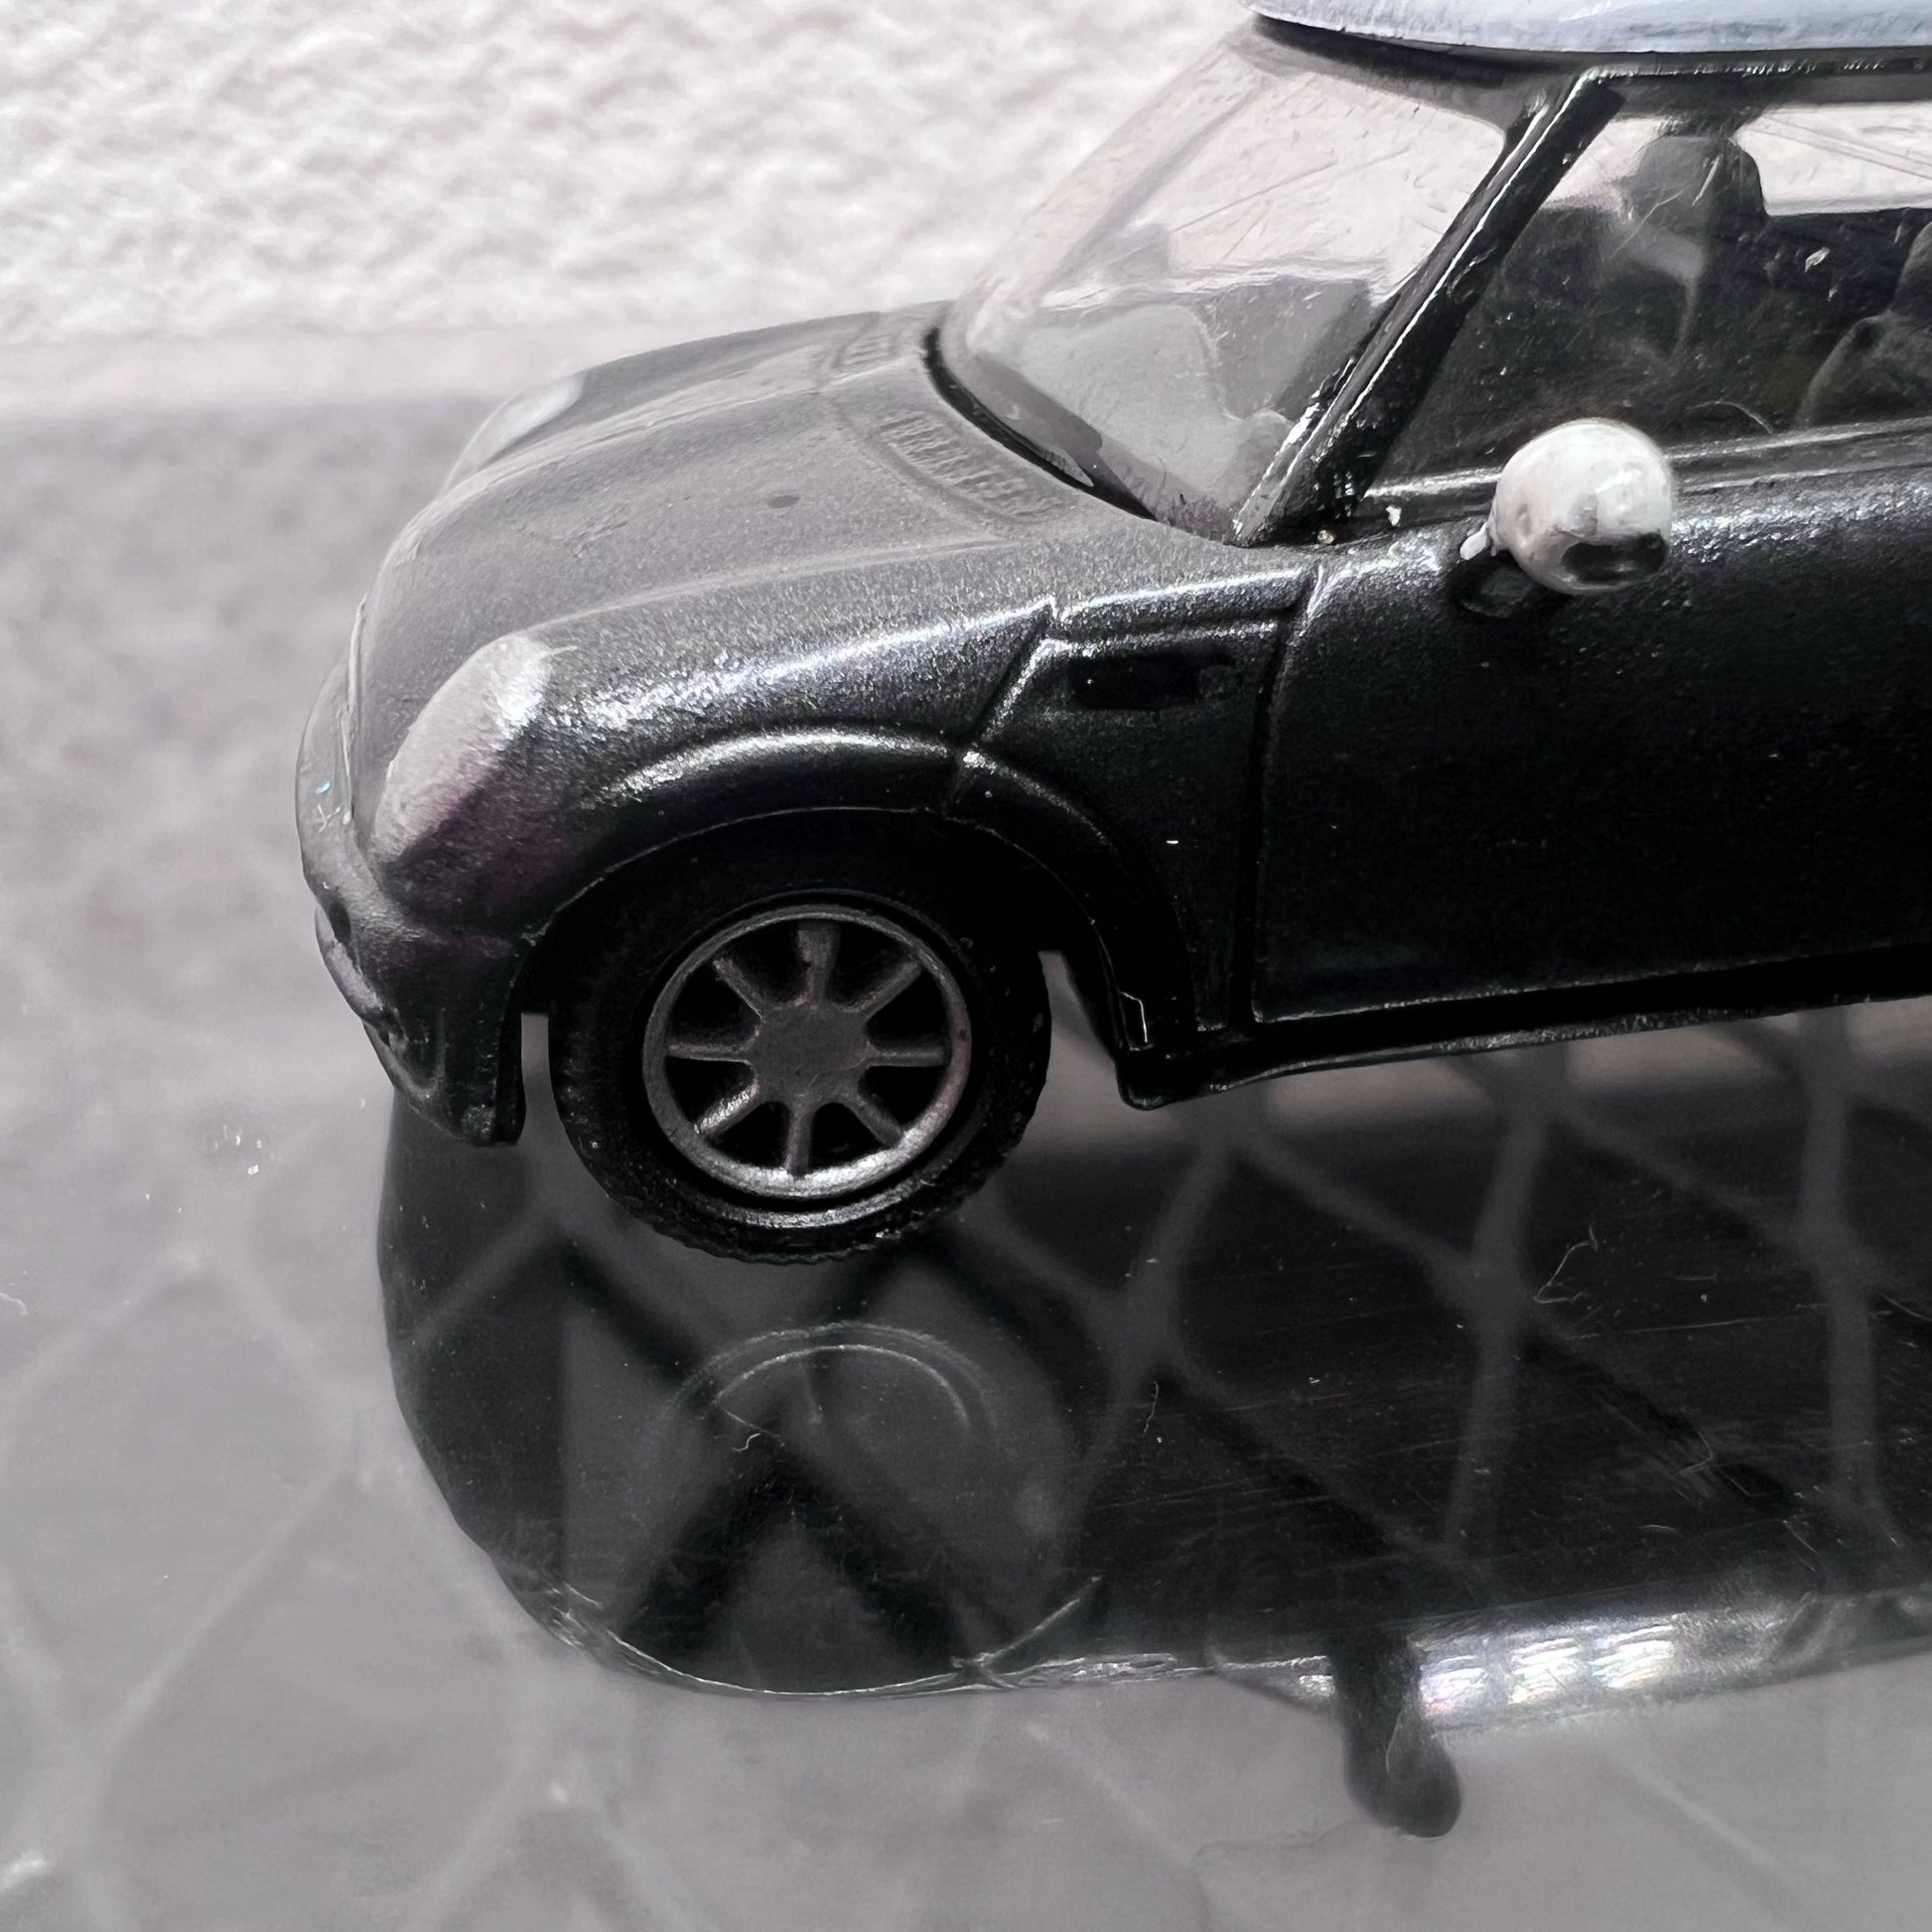 1/72 Scale Mini Cooper Diecast Model Car